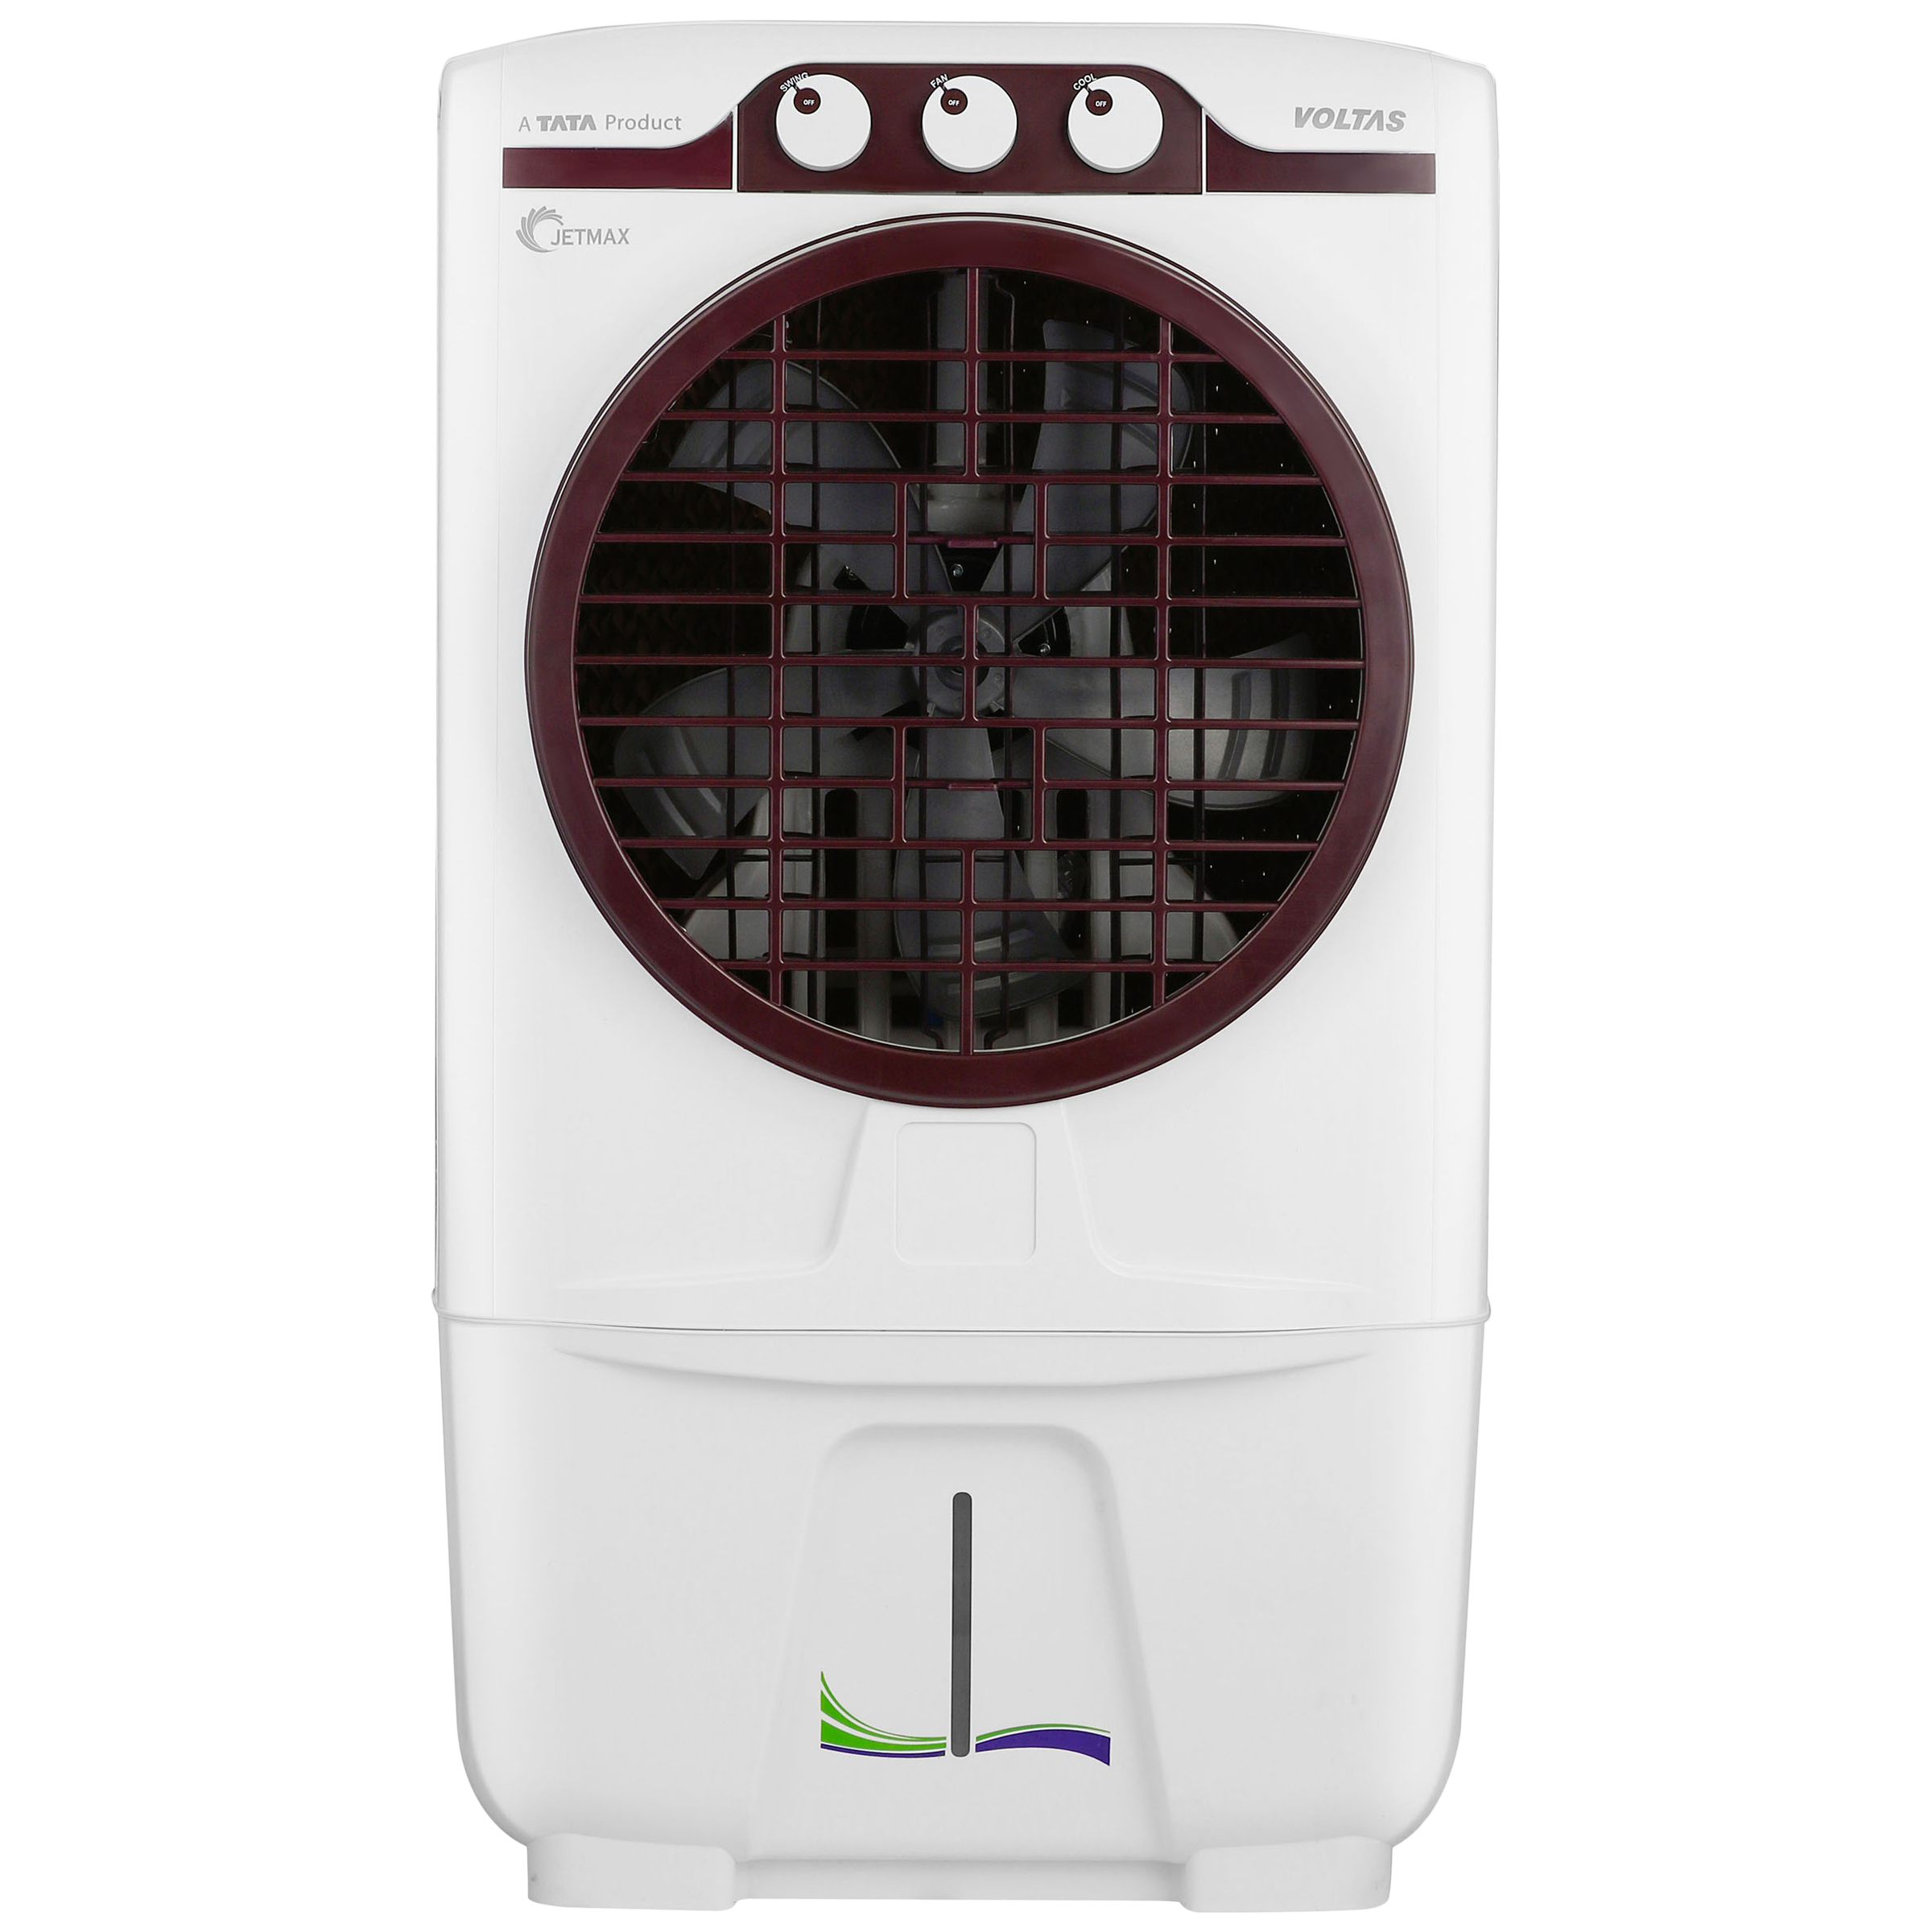 VOLTAS 70 Litres Desert Air Cooler (Water Level Indicator, JetMax 70, White)